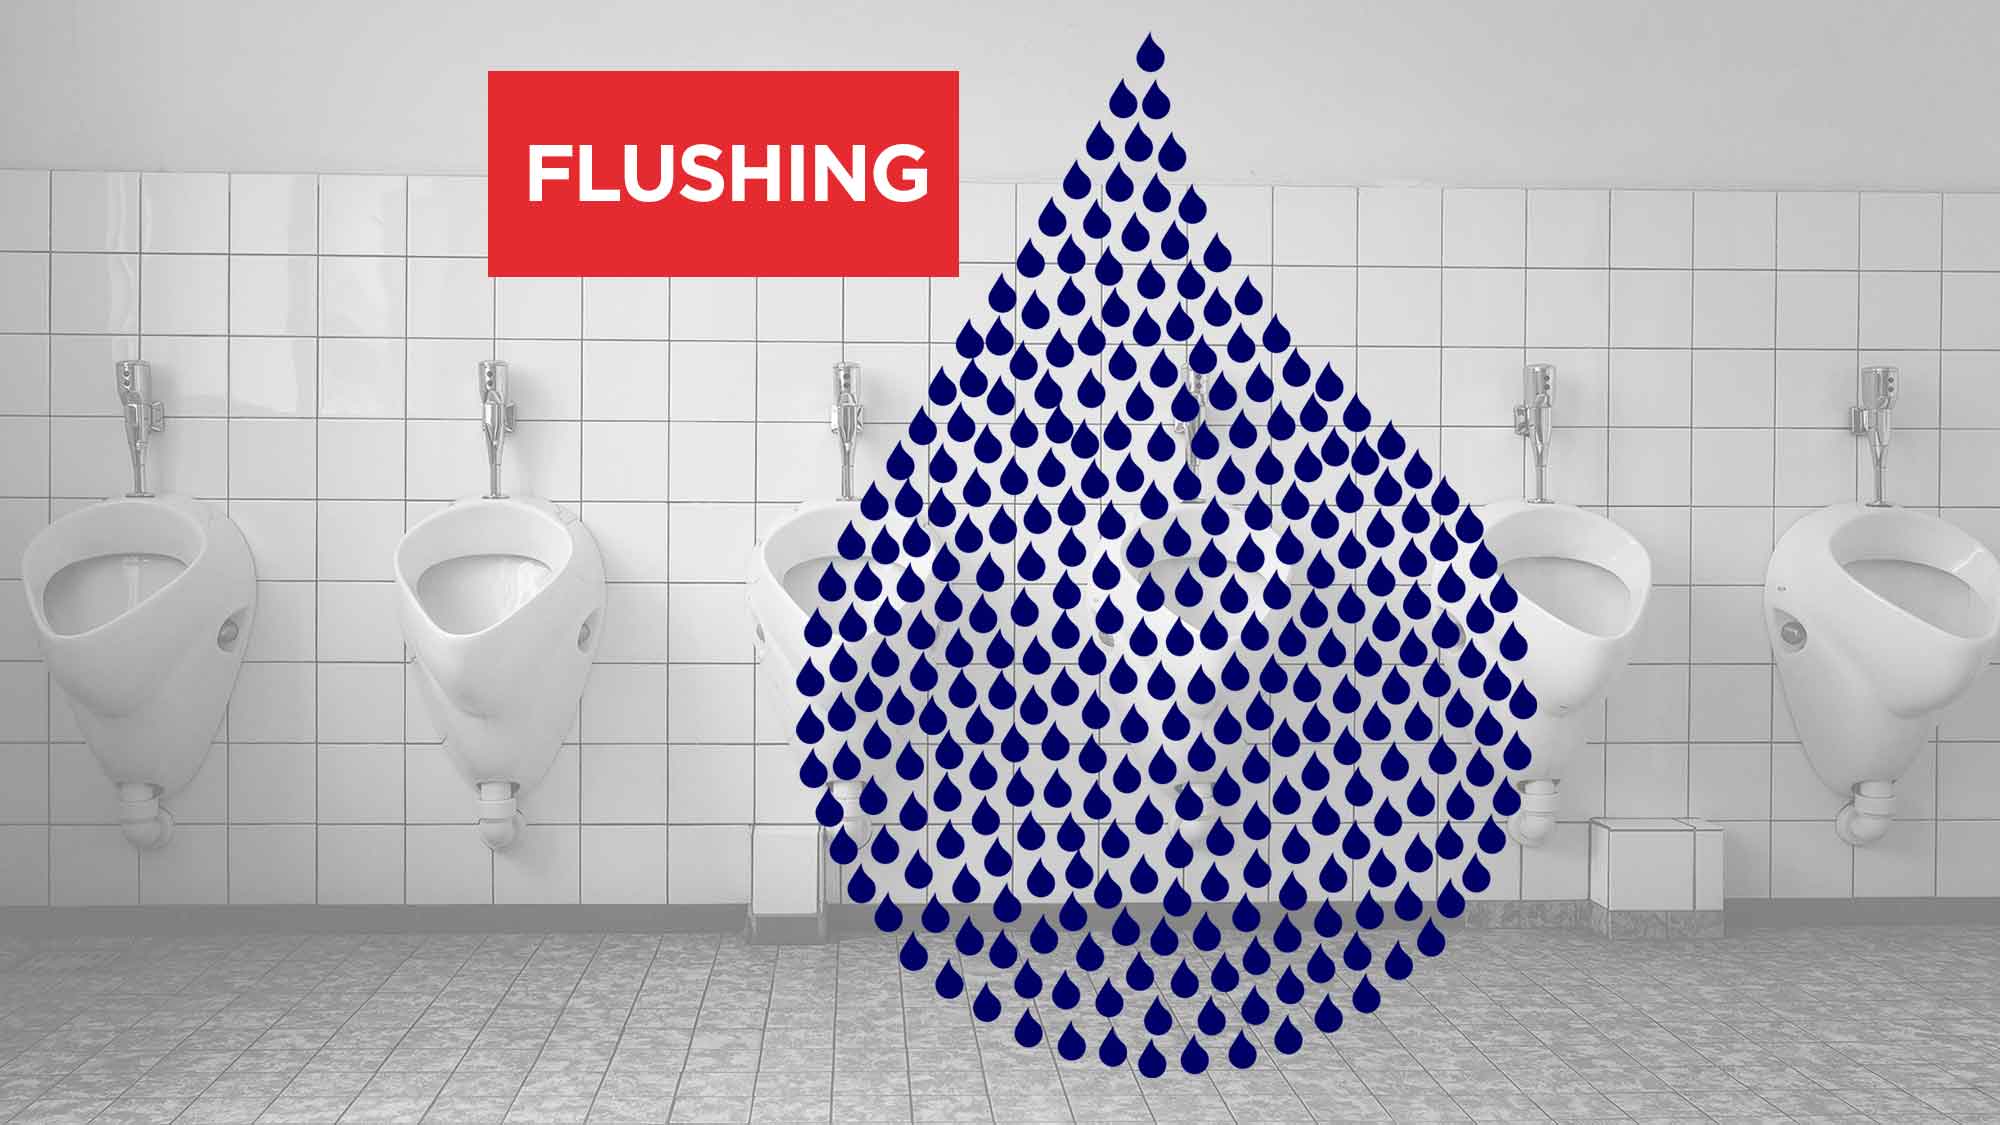 Urinal Etiquette Flush